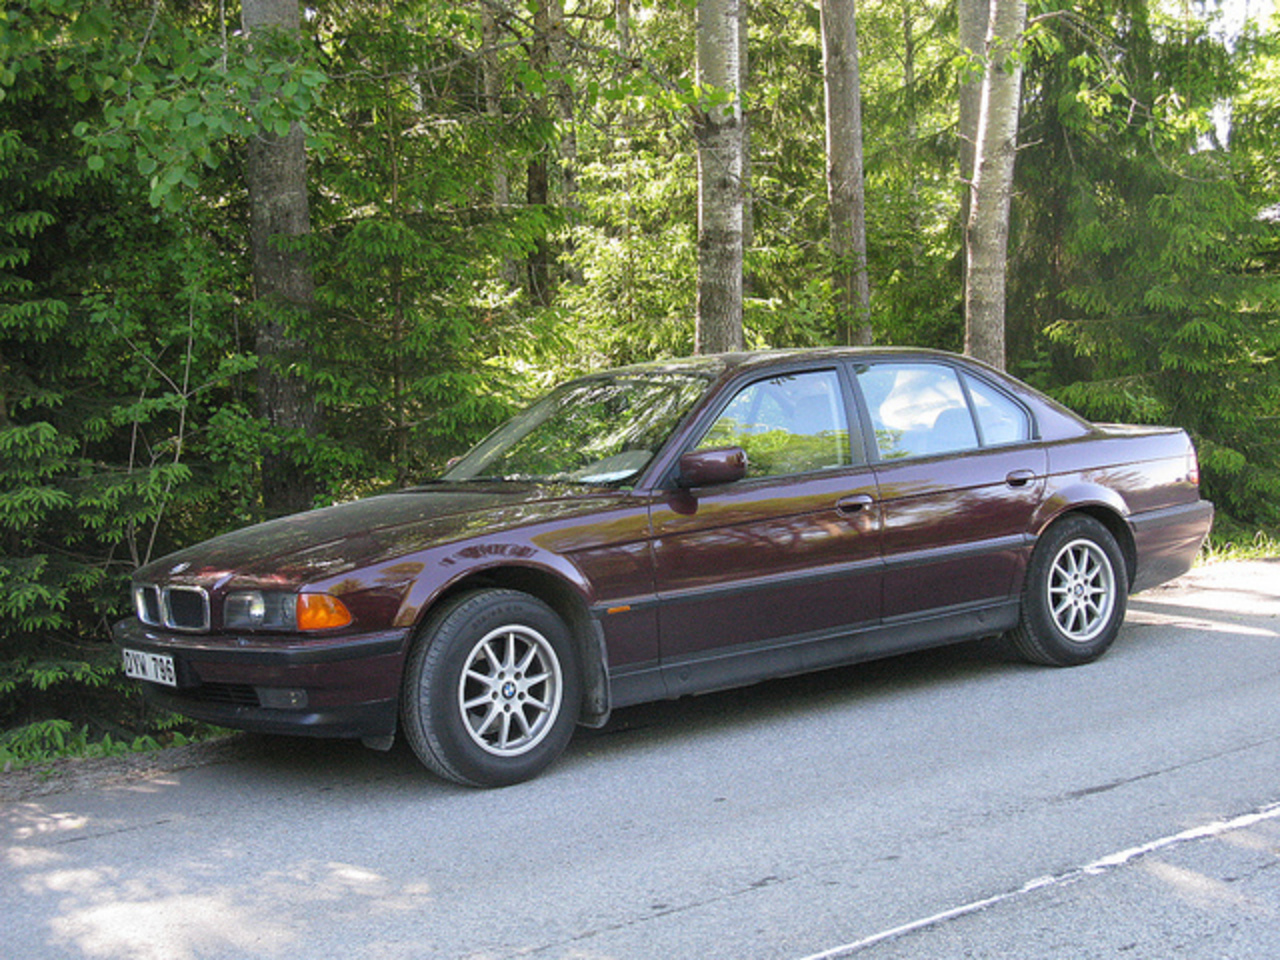 BMW 728i E38 | Flickr - Photo Sharing!